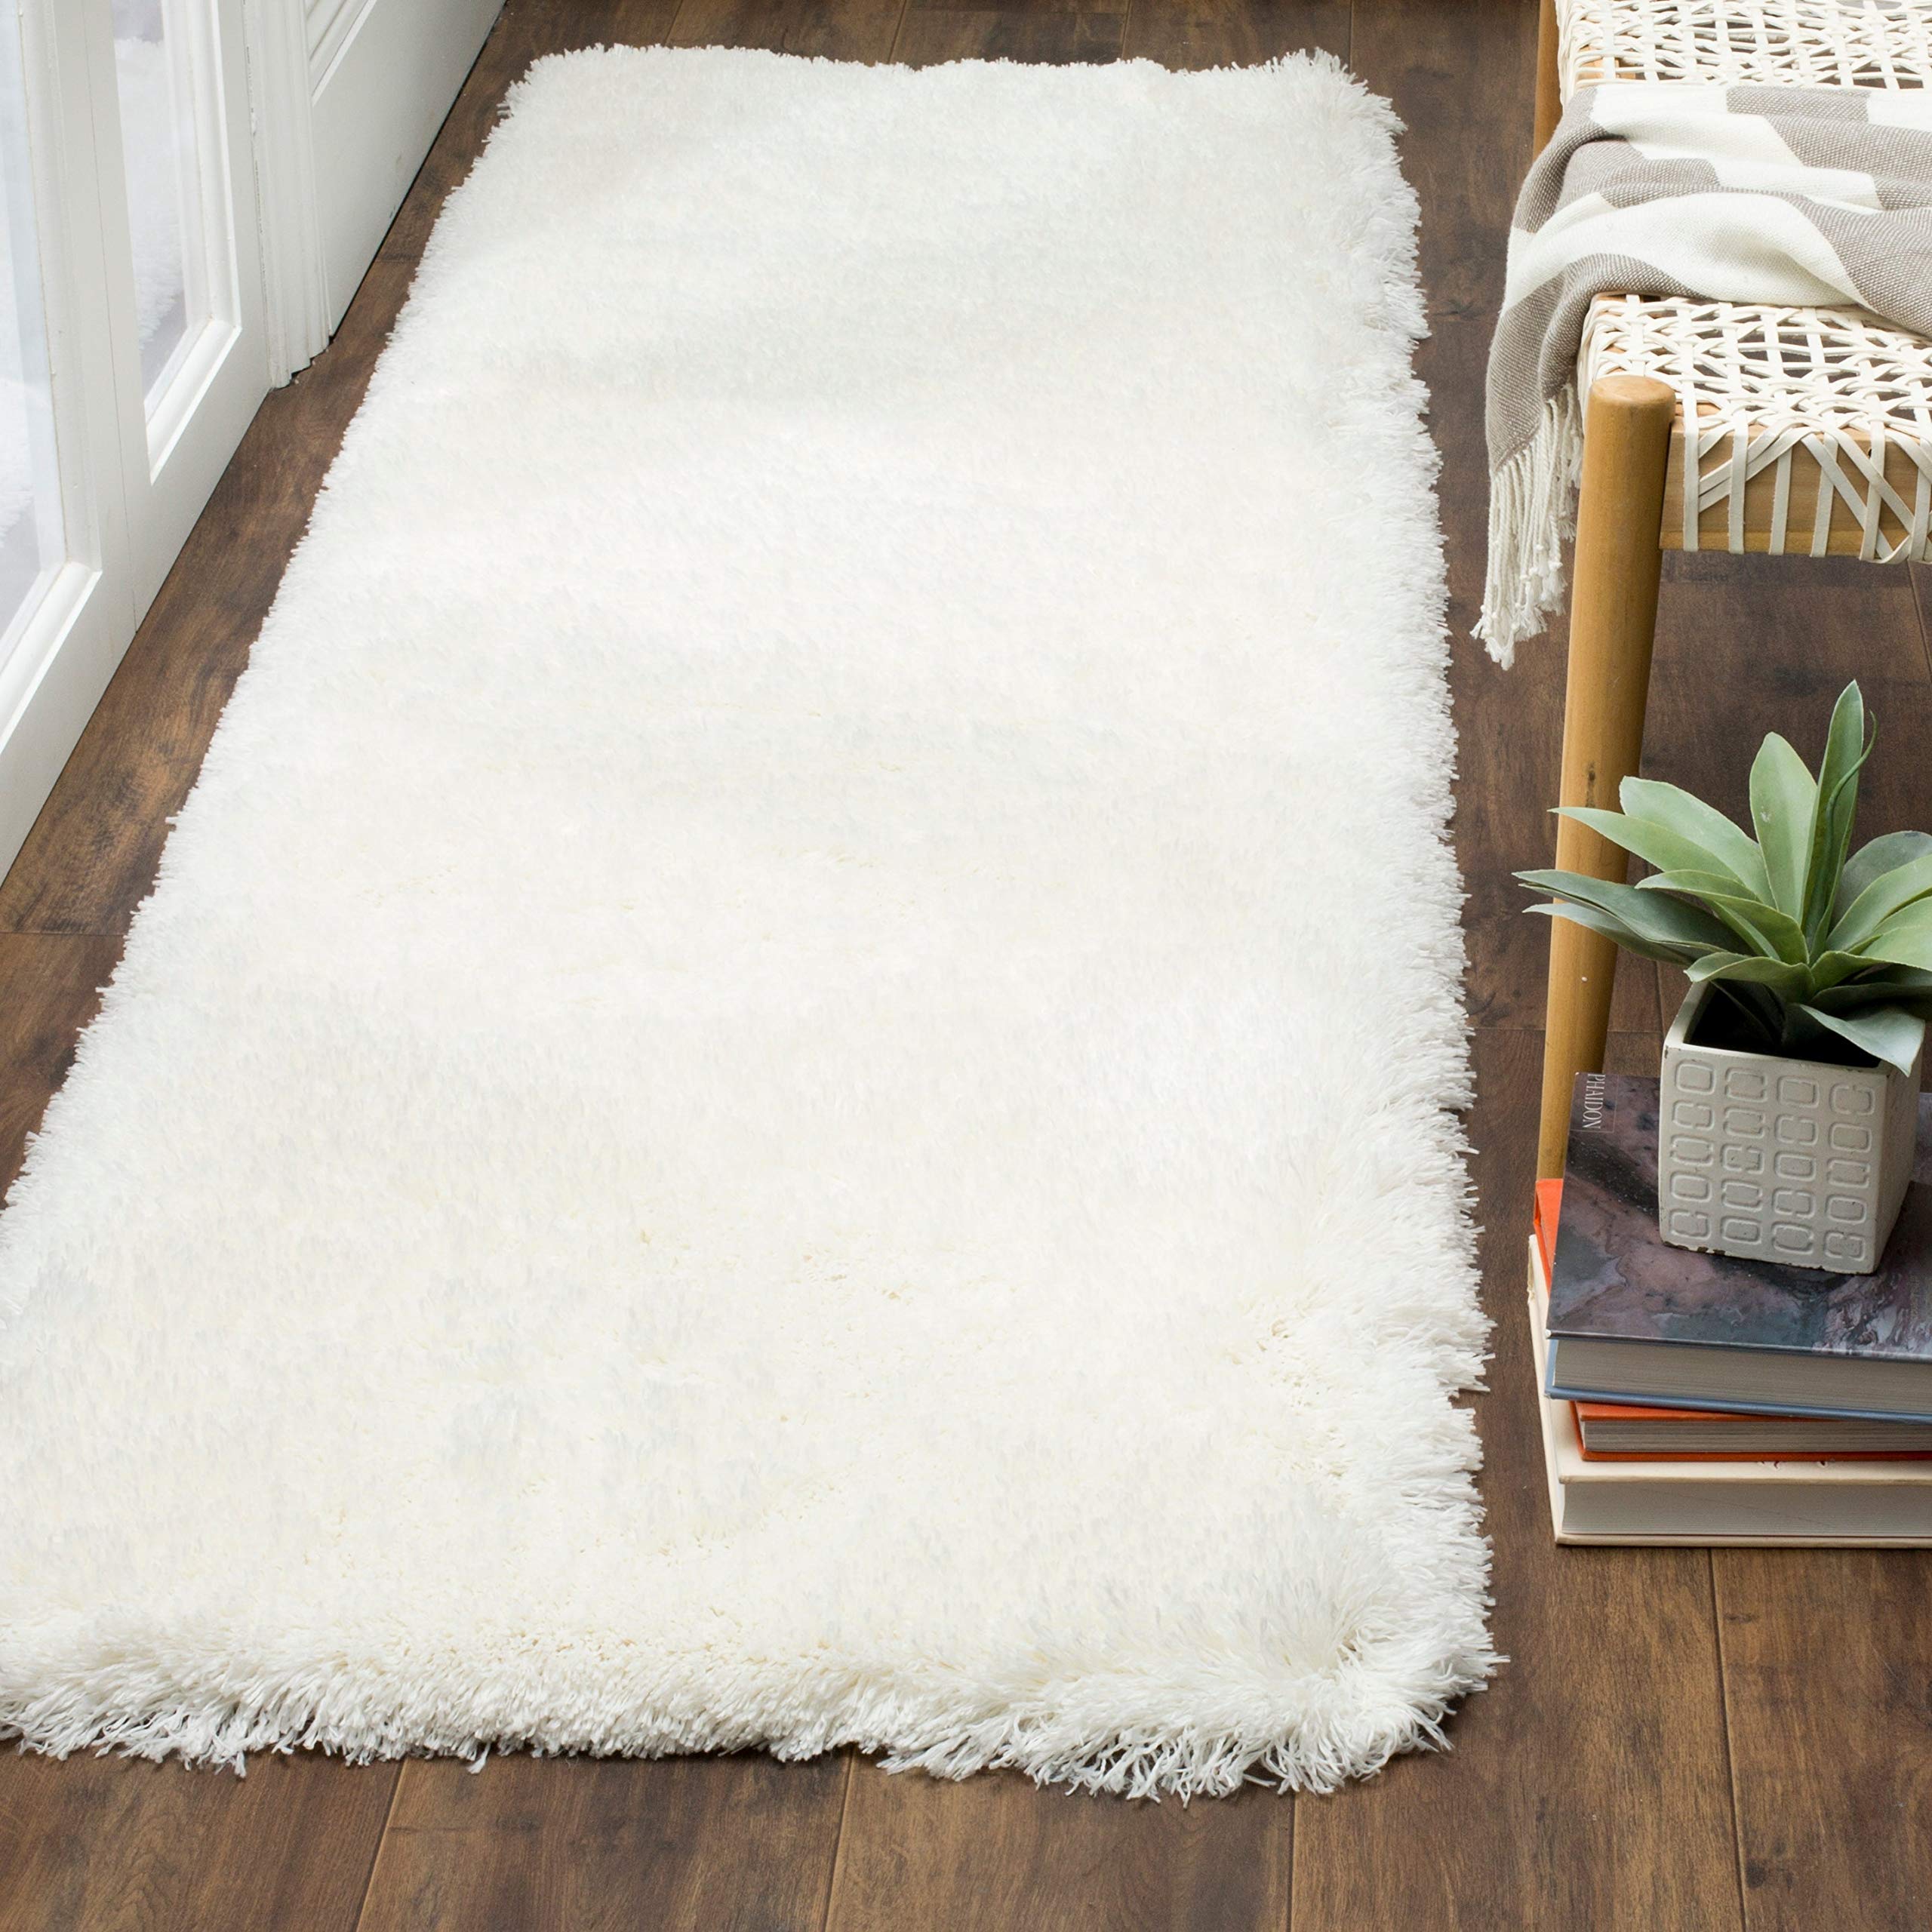  Safavieh Polar Shag 系列长条地毯 - 2 英尺 3 英尺 x 8 英尺，白色，纯色迷人设计，不脱落且易于护理，3 英寸厚，非常适合客厅、卧室的人流密集区域 (PSG800B)...